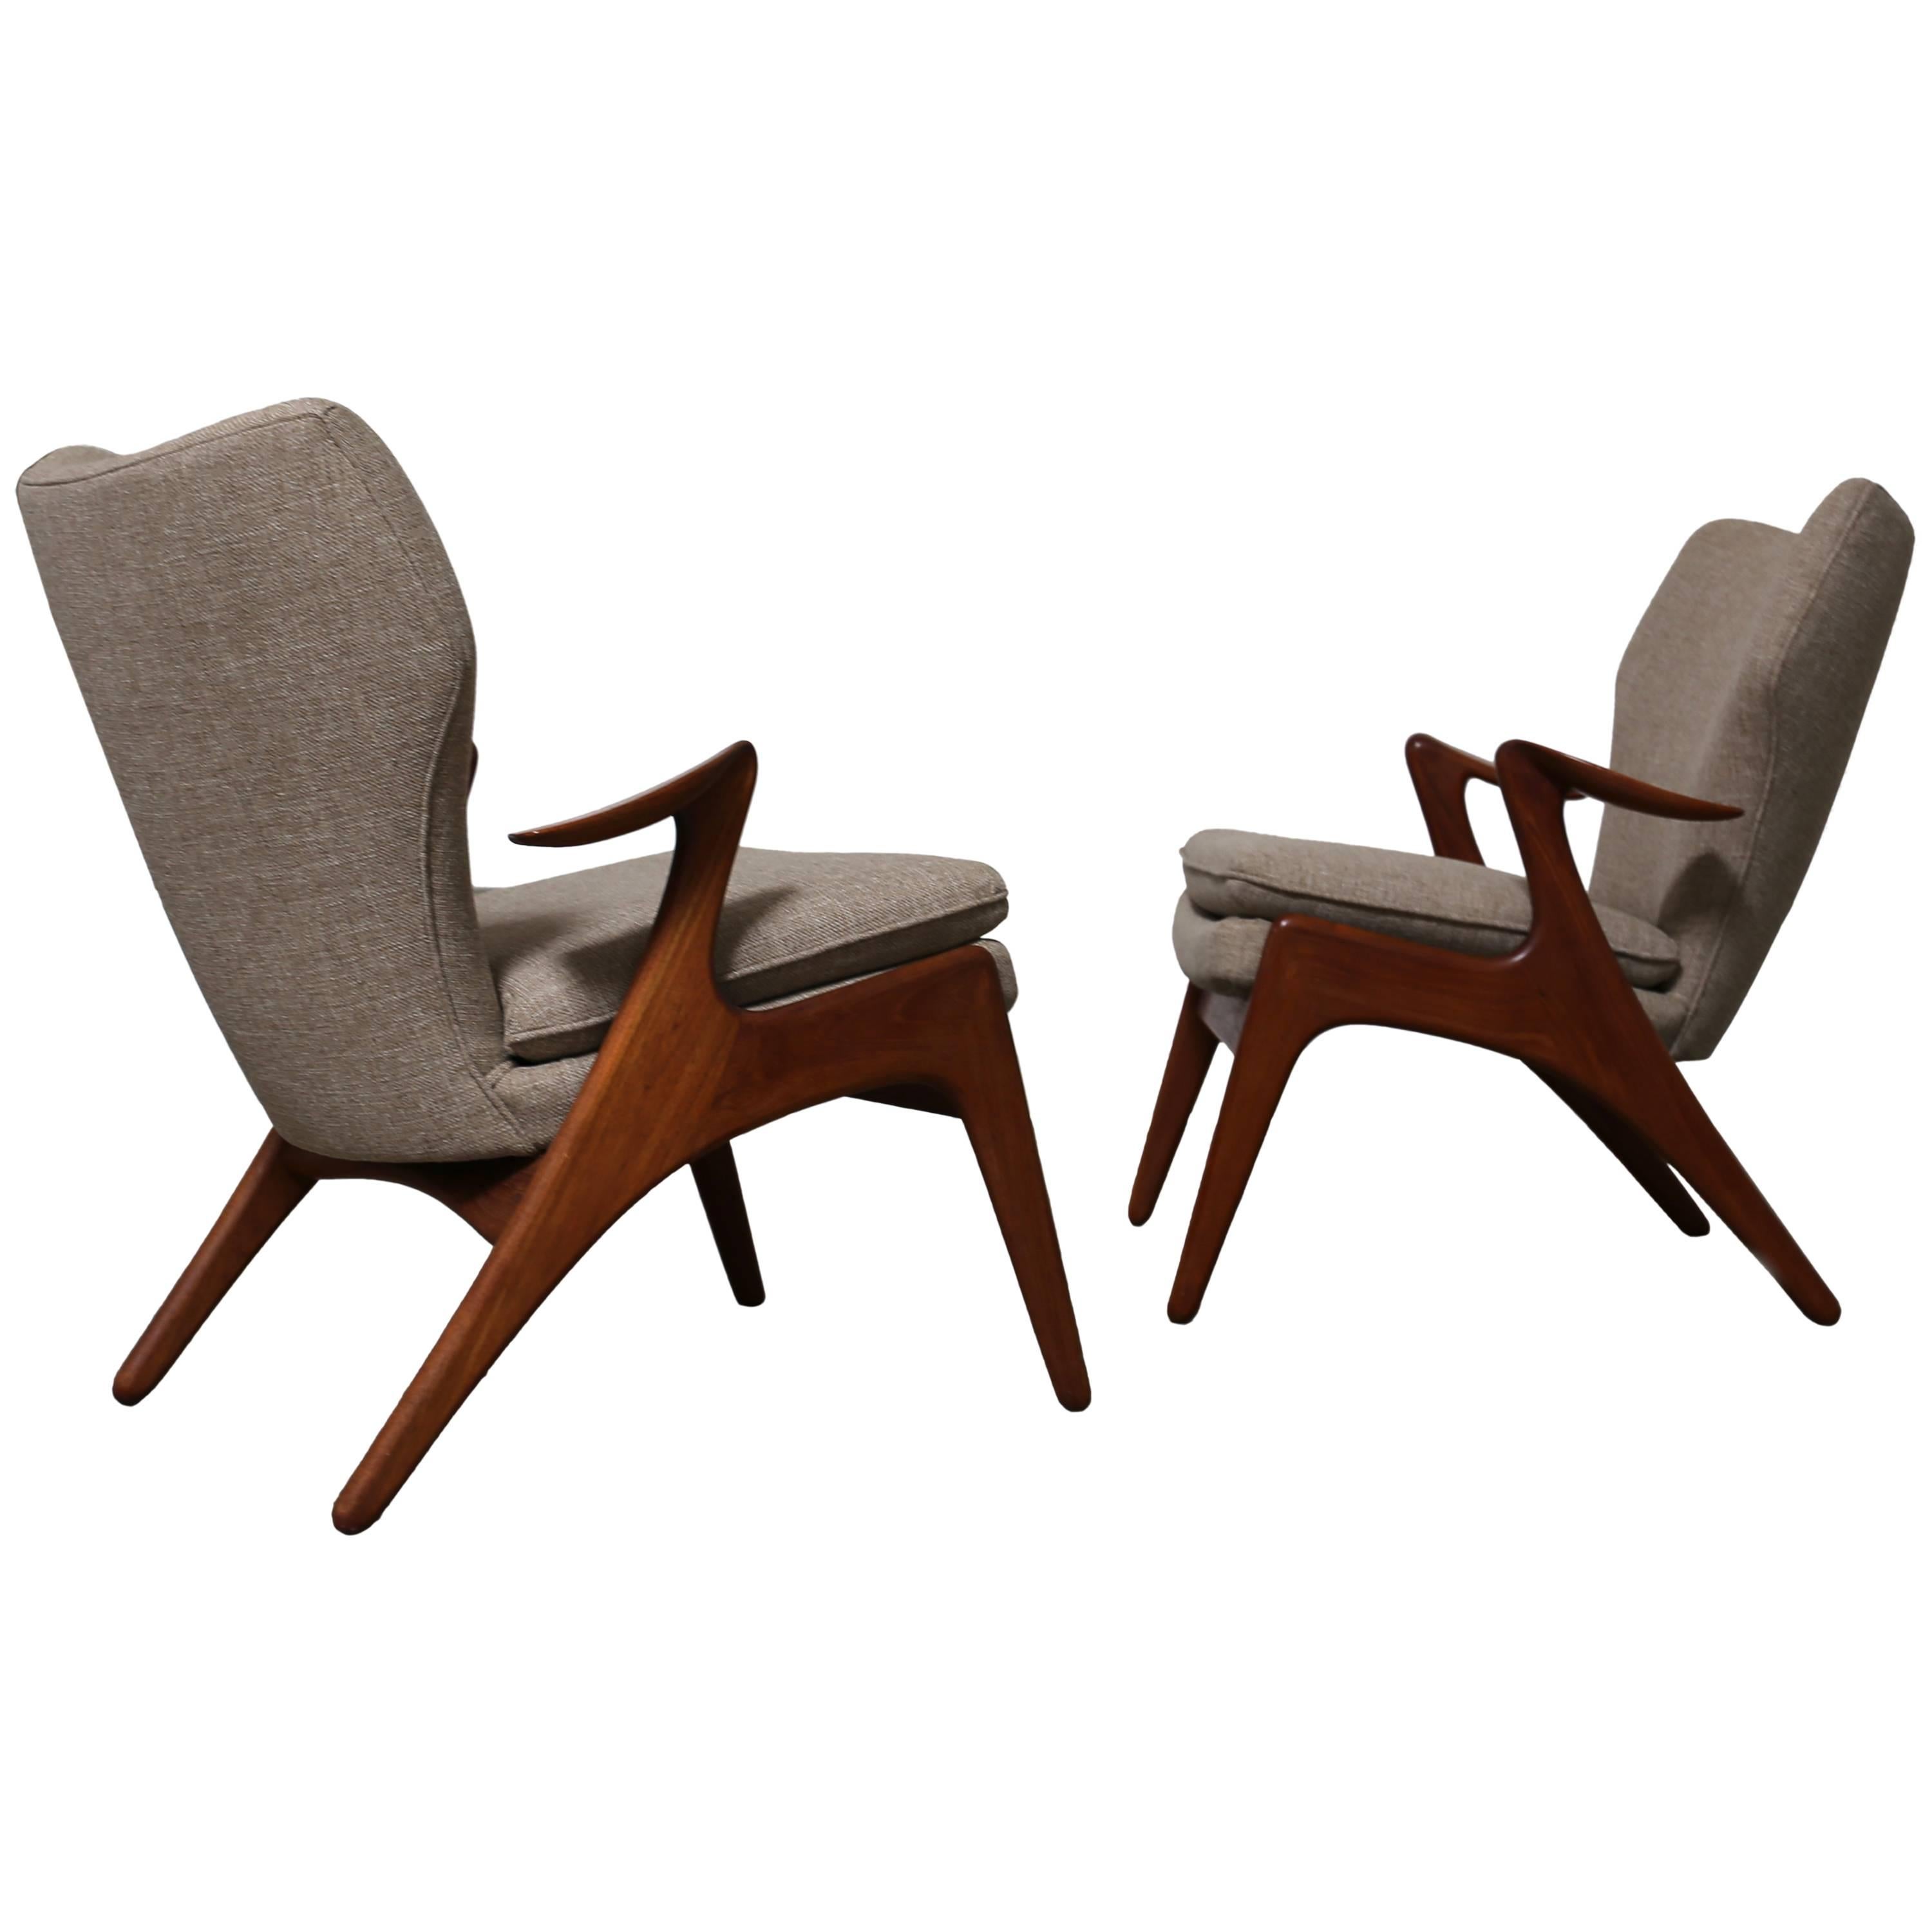 Pair of sculptural teak lounge chairs by Glostrup Mobelfabrik